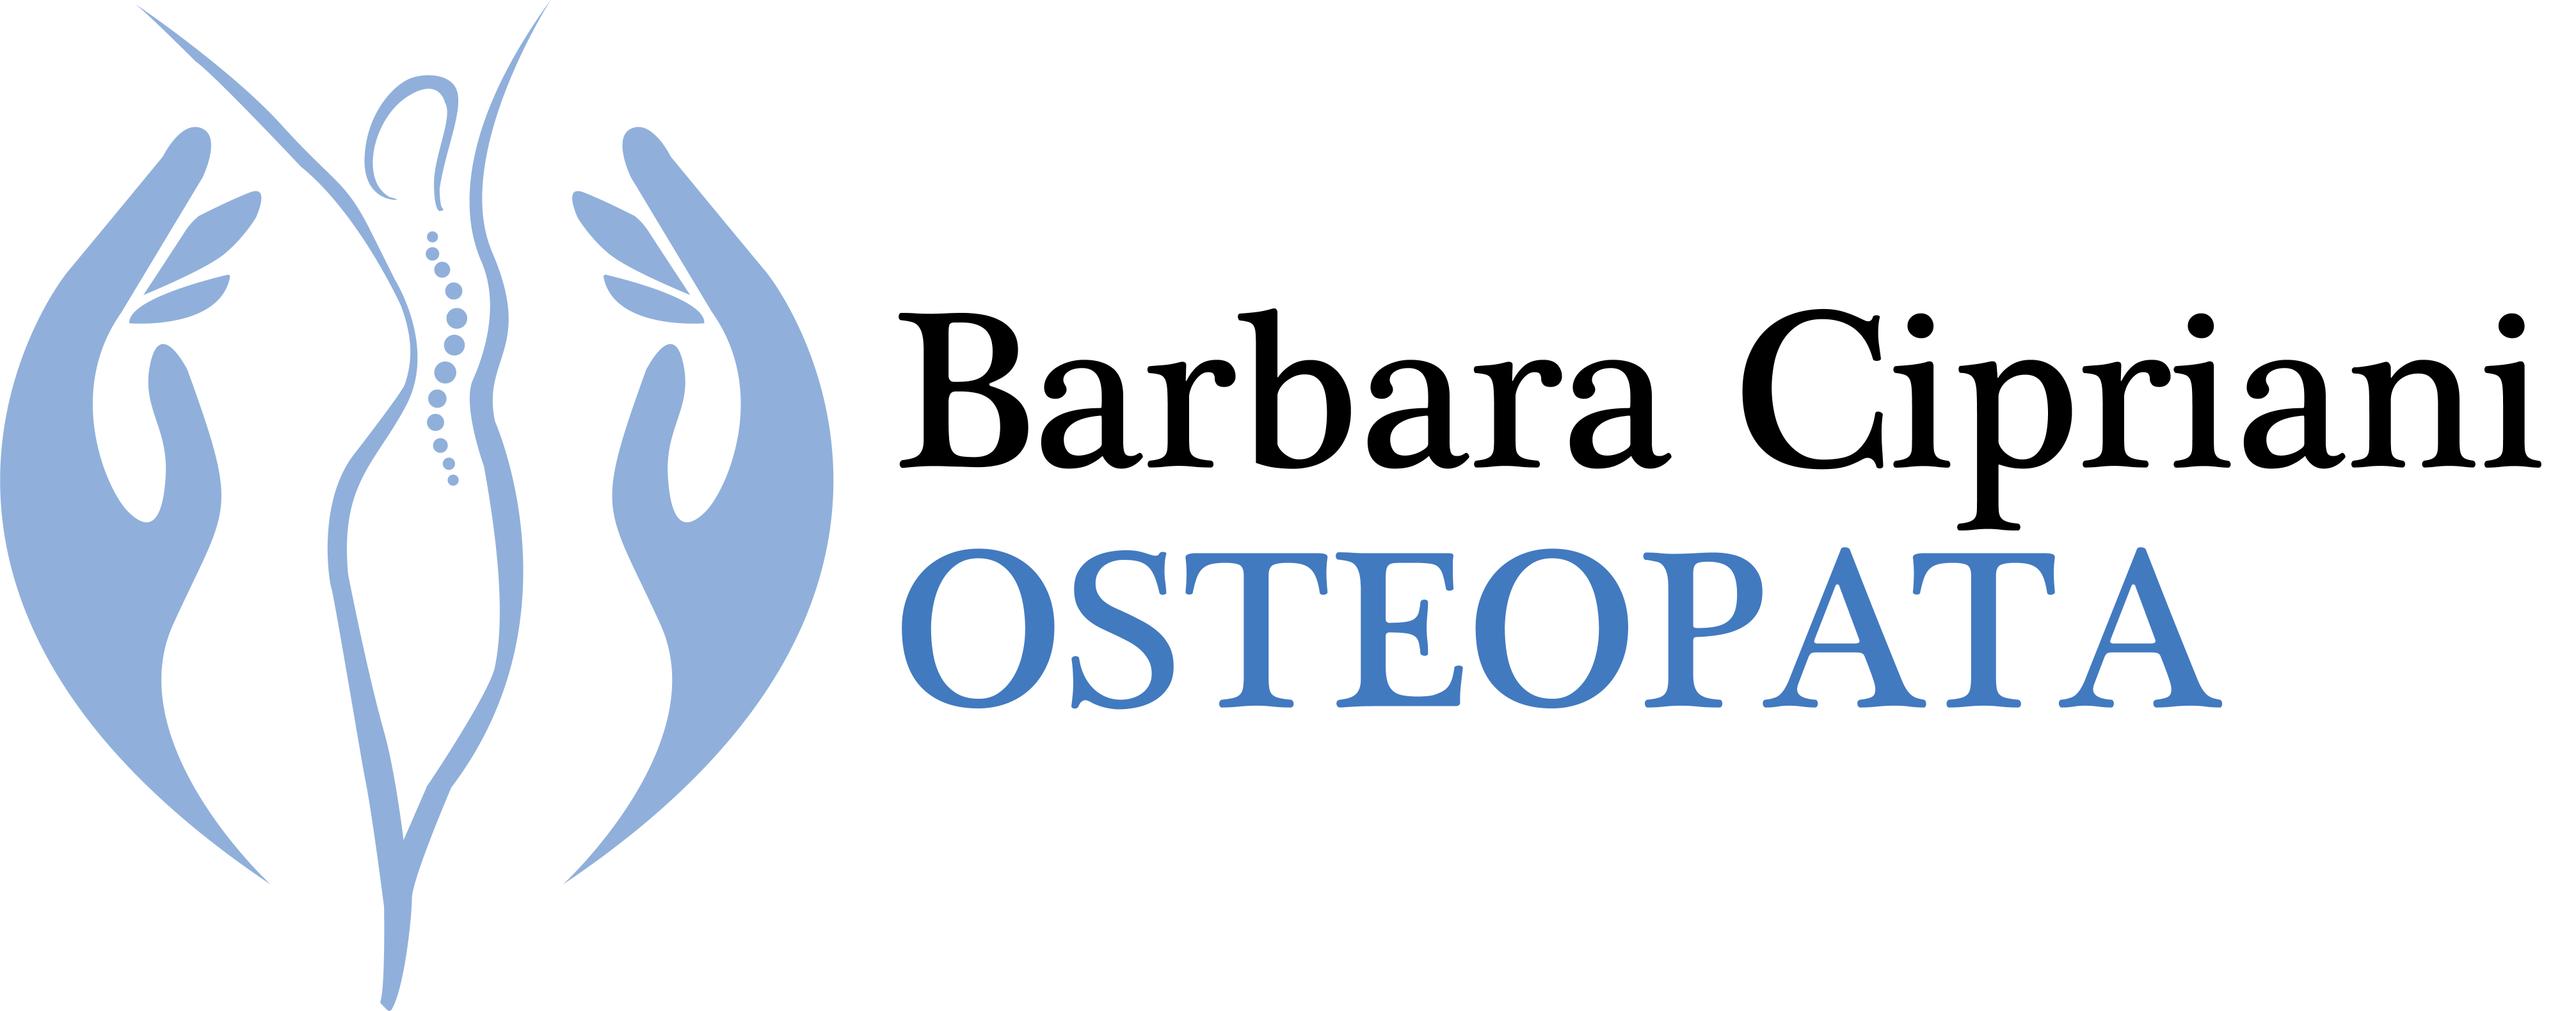 Cipriani Barbara Osteopata